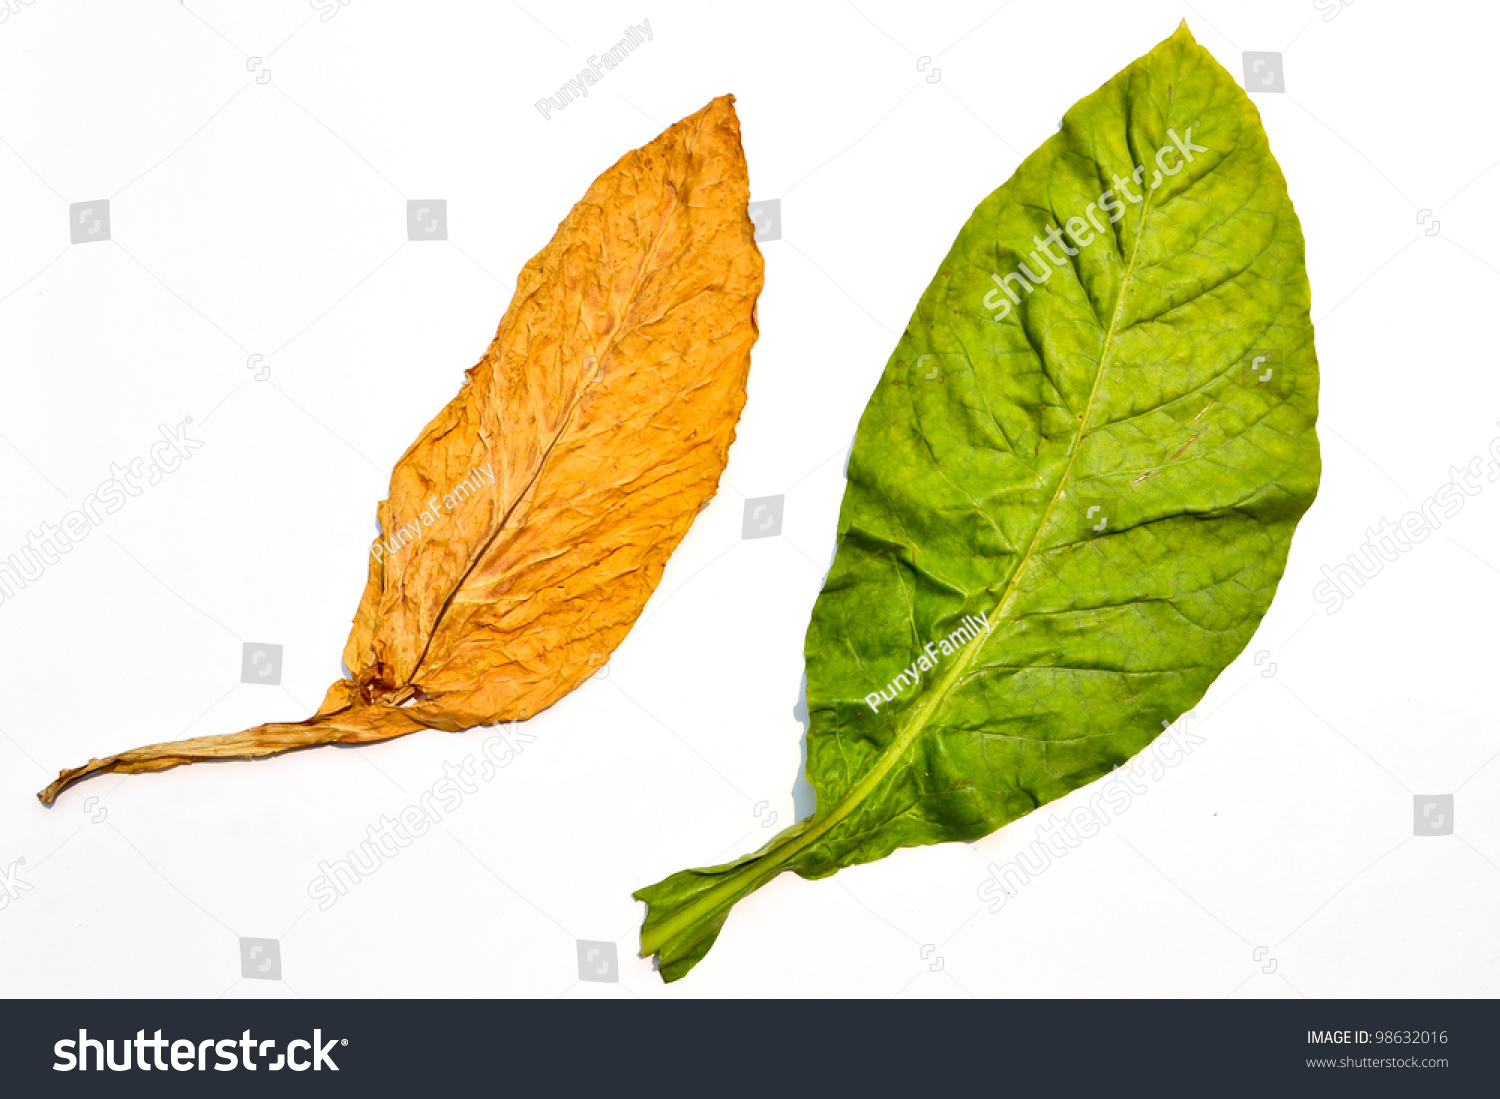 clip art tobacco leaf - photo #36